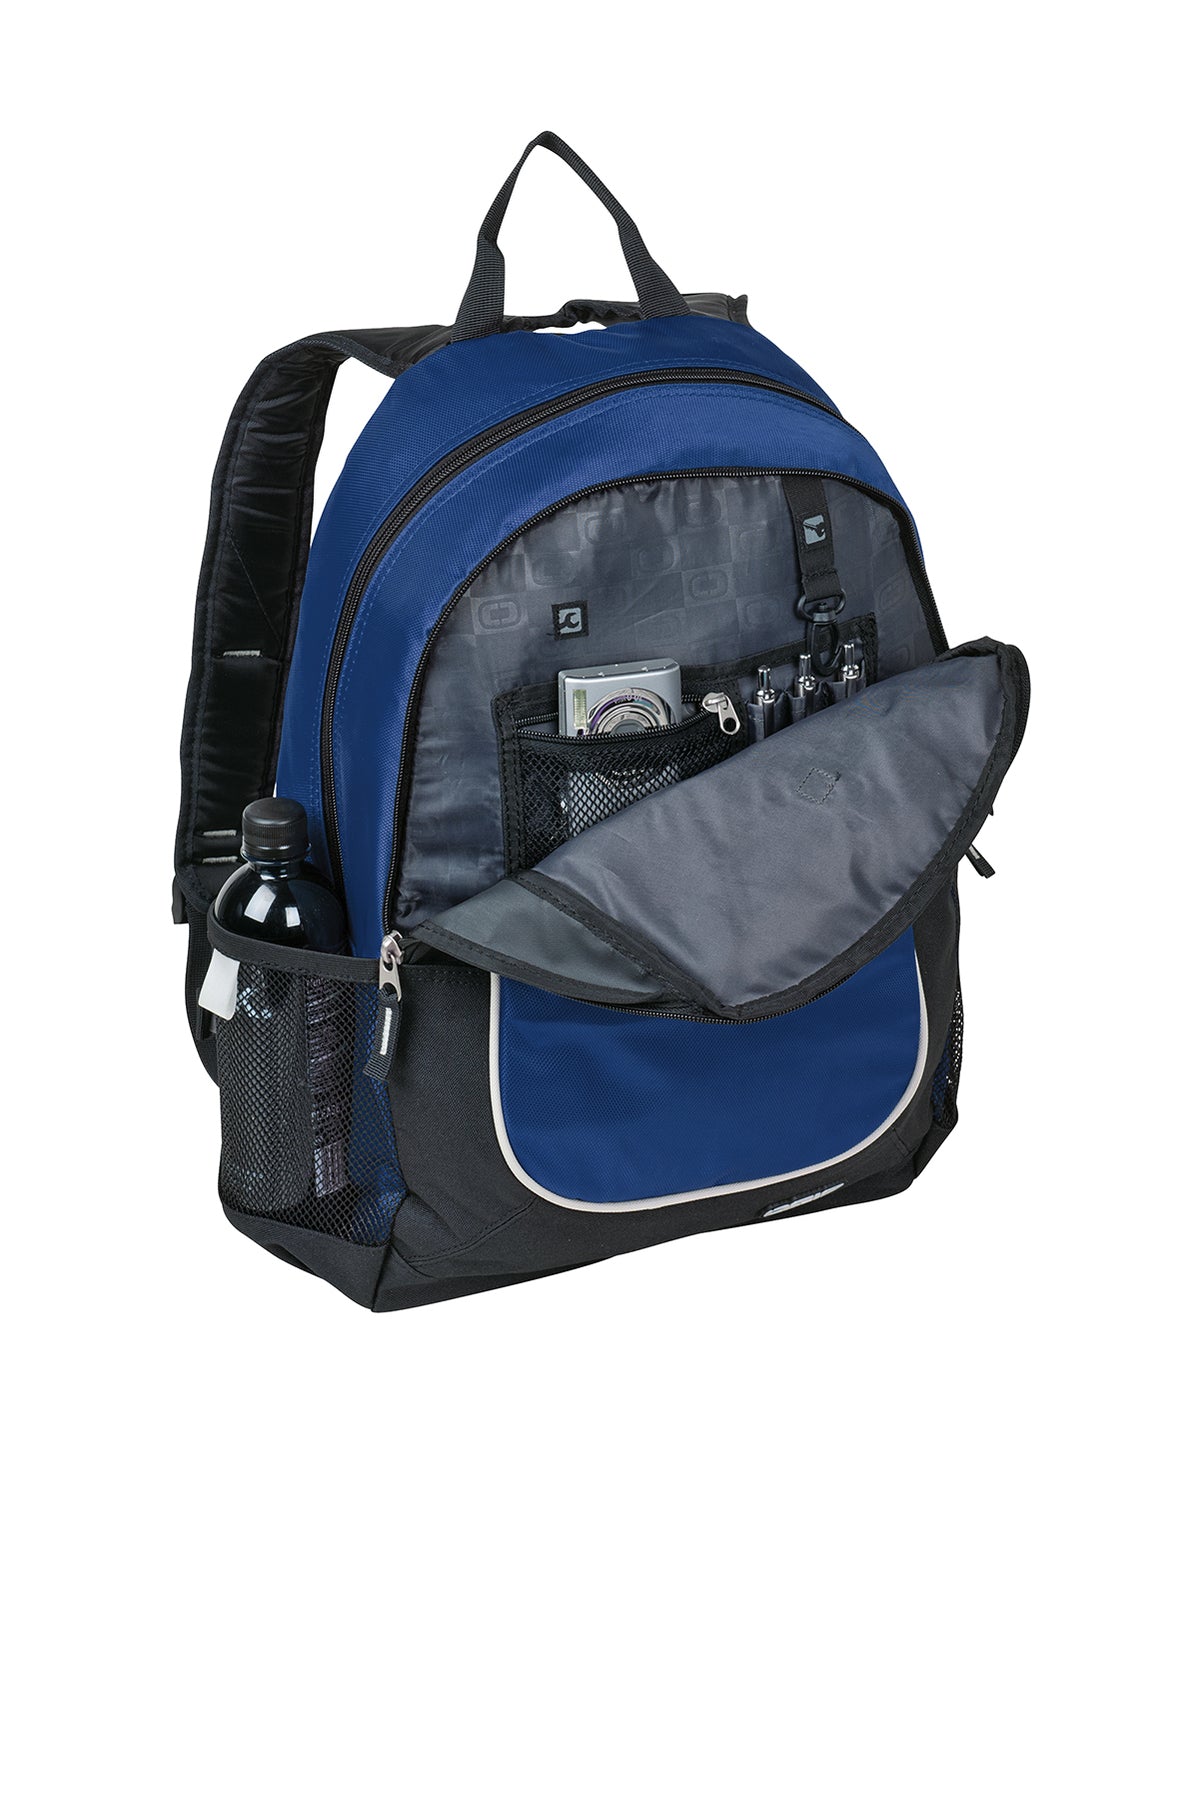 OGIO Carbon Customzied Backpacks, Royal